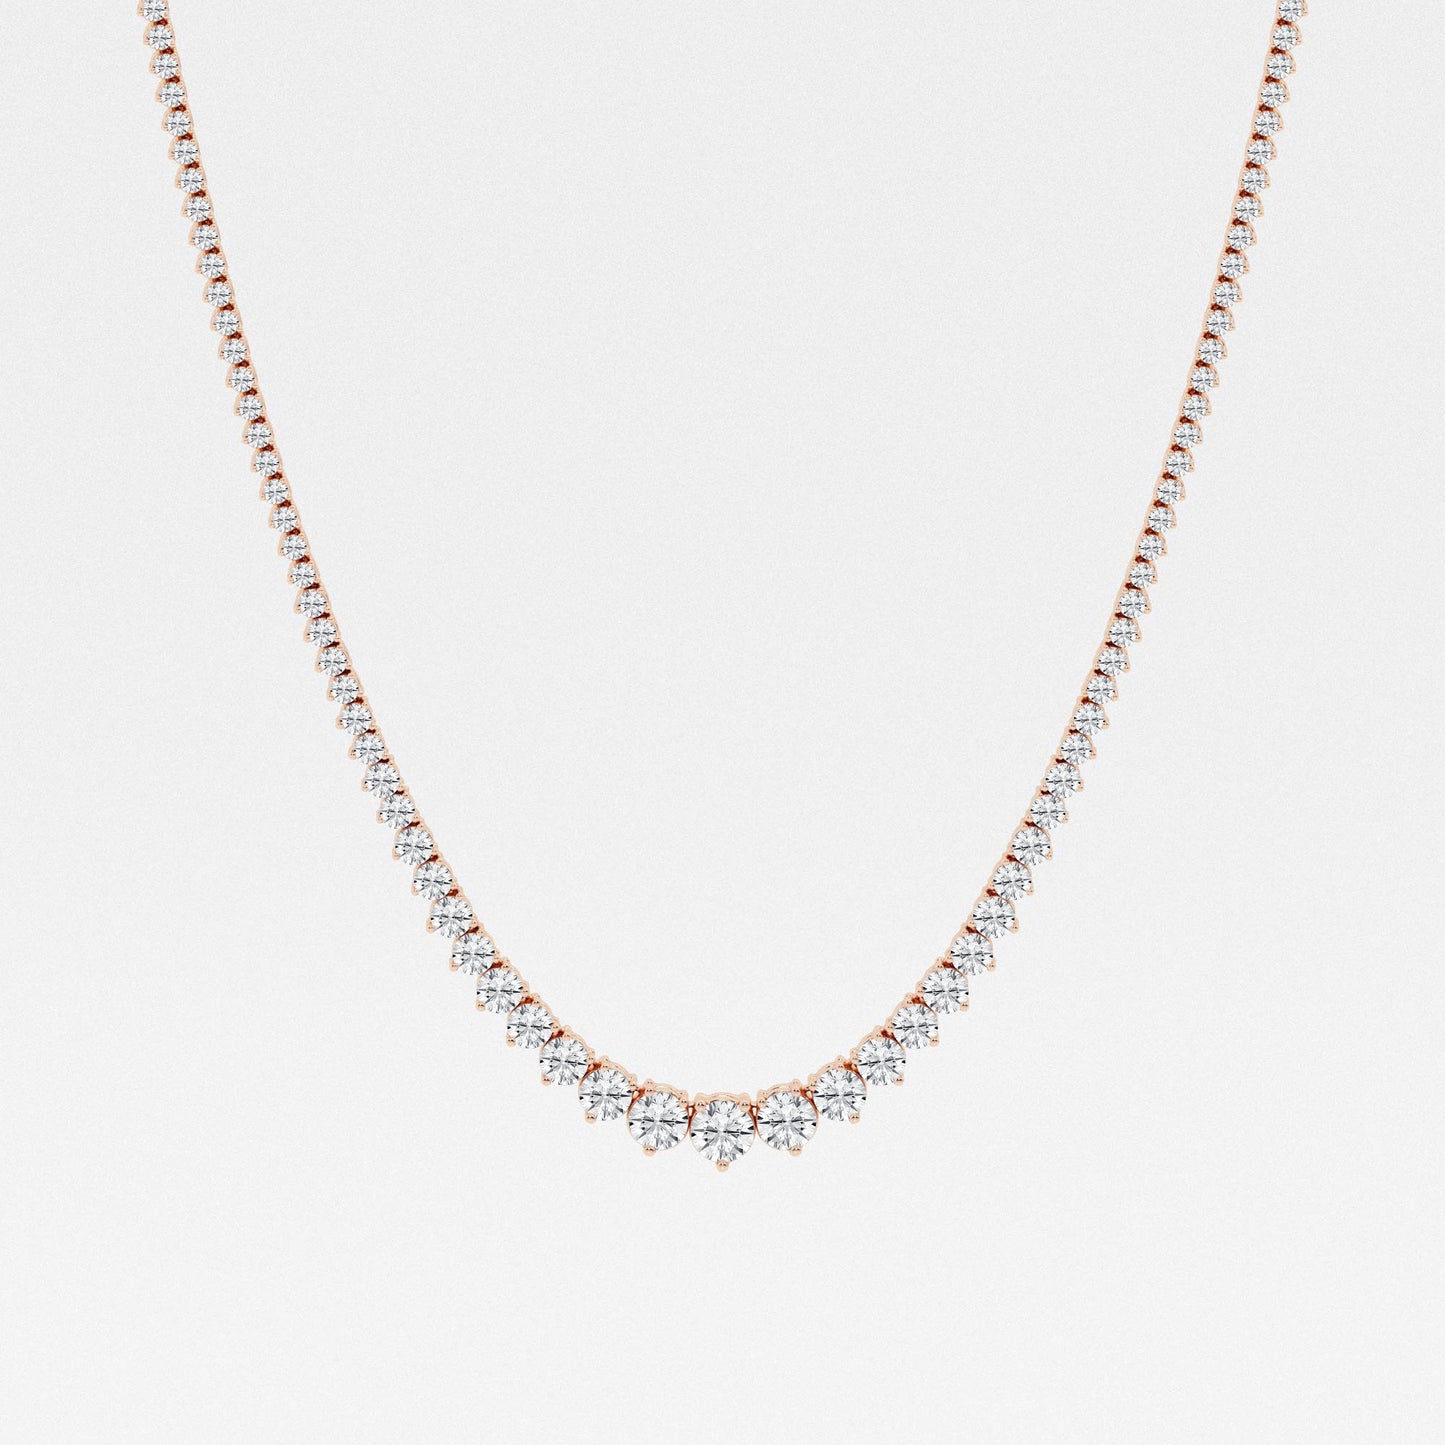 Round Lab Diamond Graduated Riviera Necklace 14K White Gold (10 ct. tw.) (7283084918968)